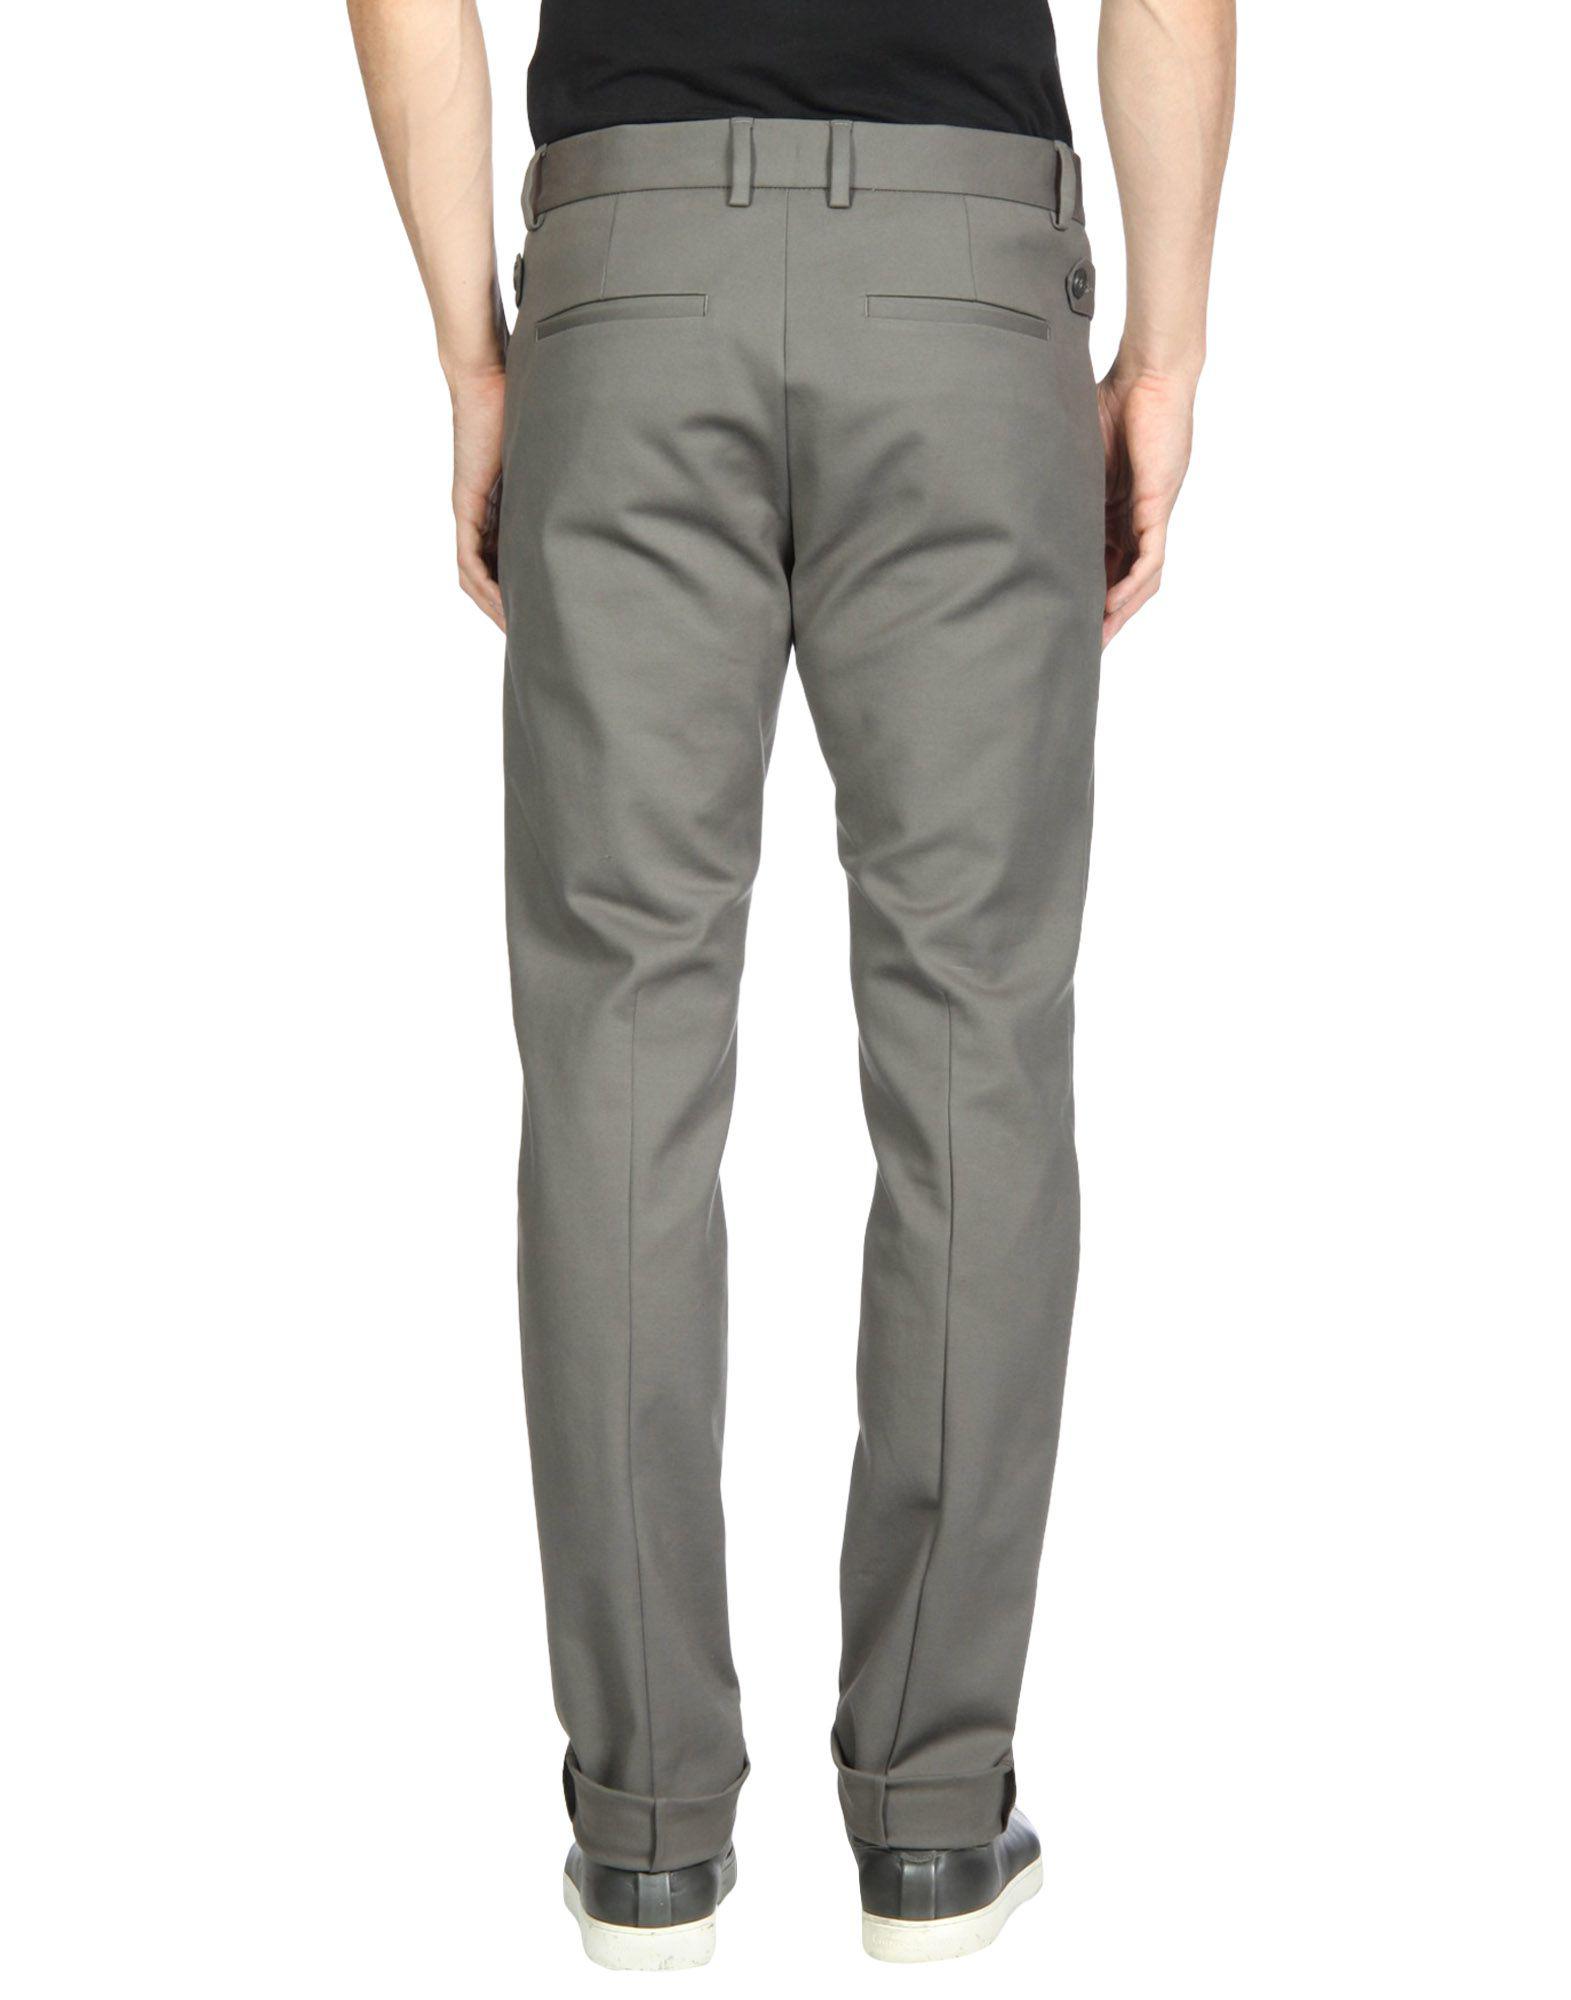 Emporio Armani Cotton Casual Pants in Lead (Gray) for Men - Lyst